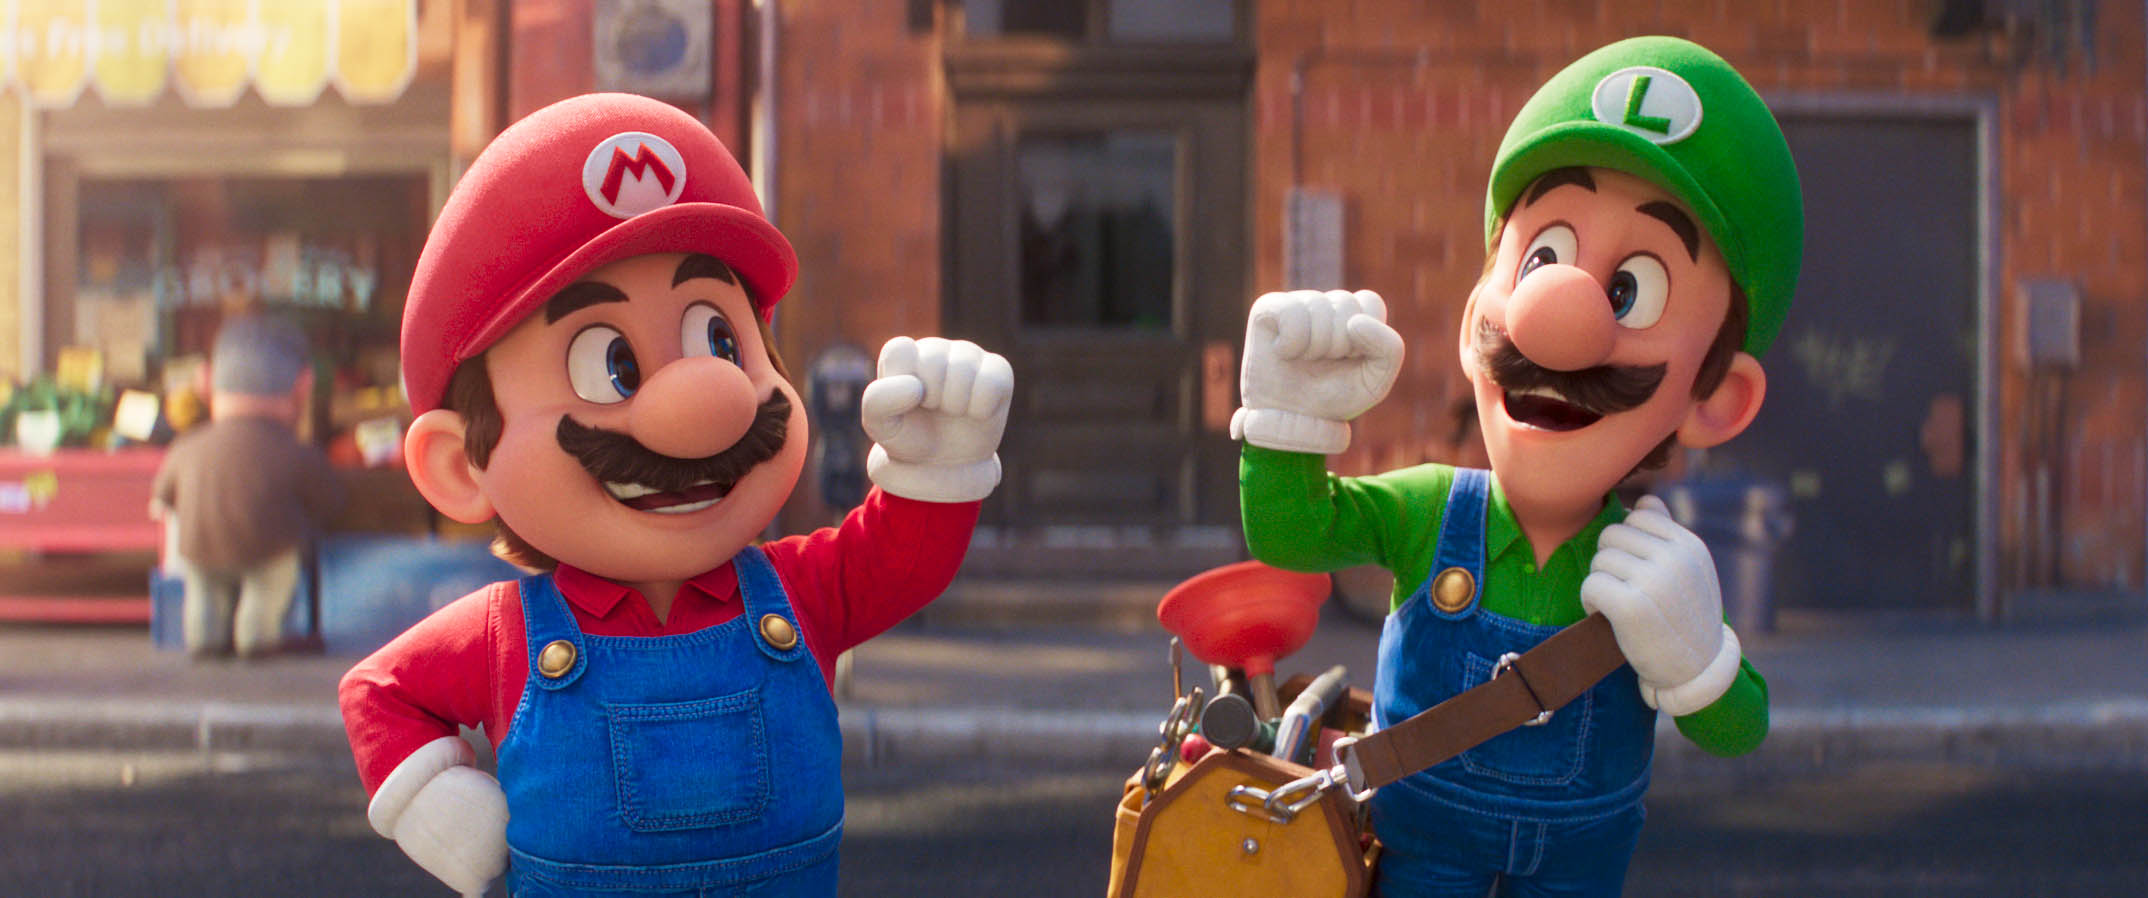 Super Mario Bros. Il Film [credit: courtesy of Nintendo; Copyright 2022 Nintendo and Universal Studios]